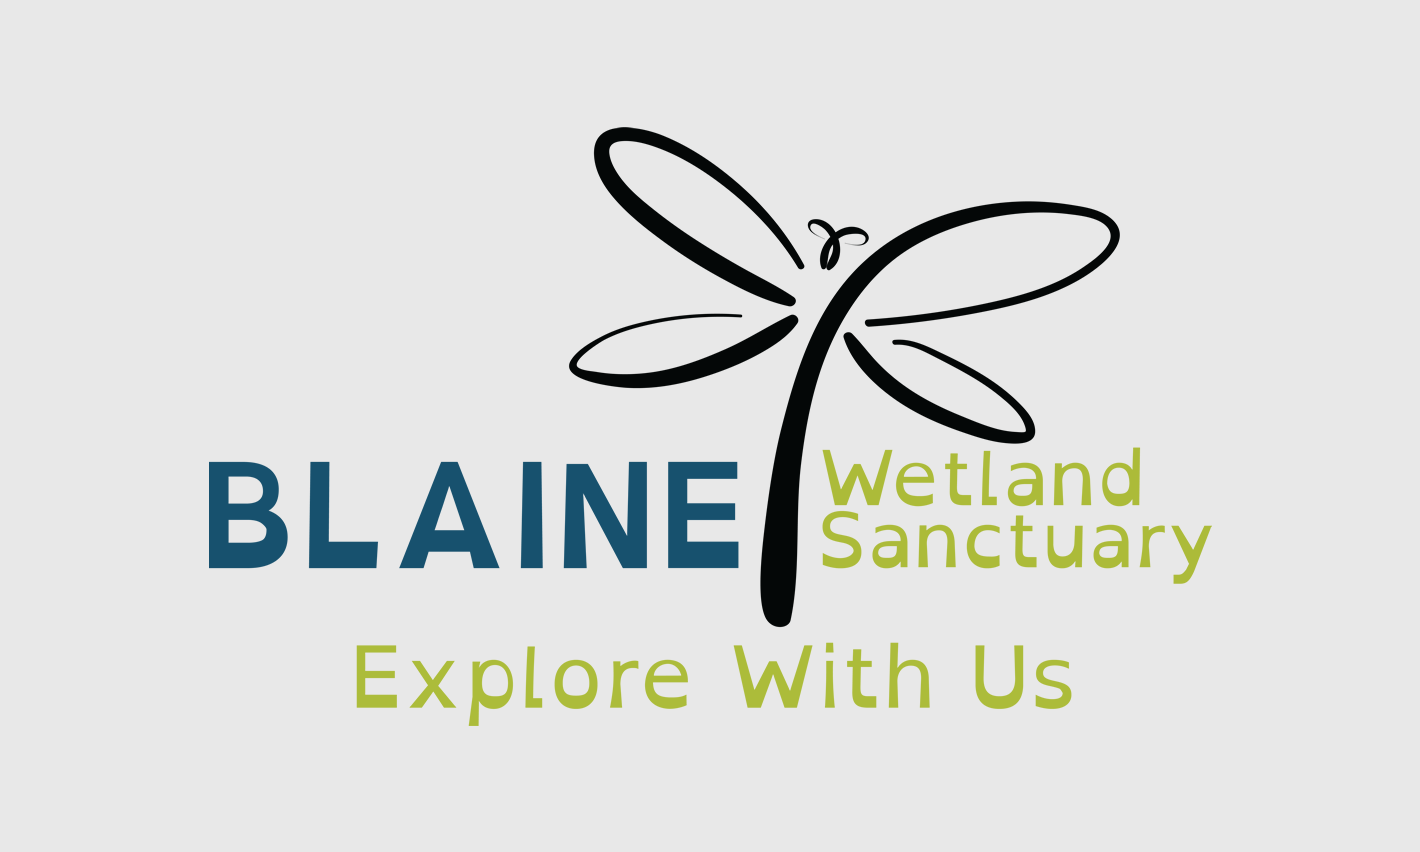 Blaine Wetland Sanctuary Logo Design